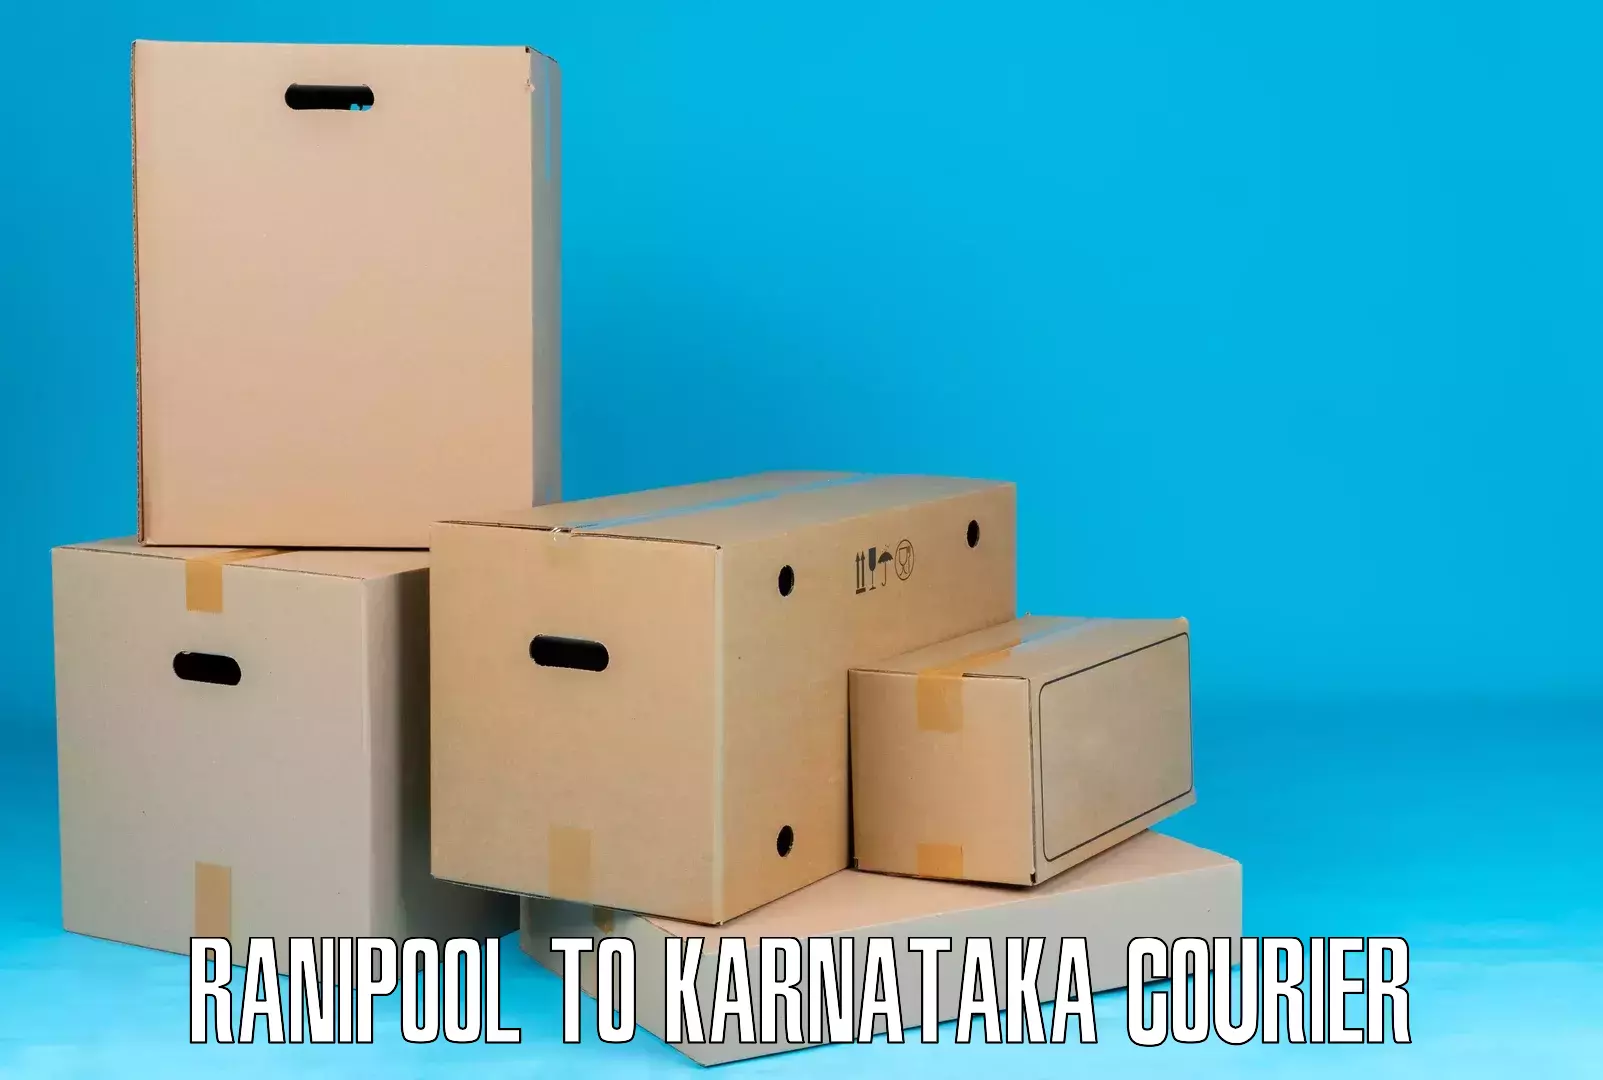 Premium courier solutions Ranipool to Kulshekar